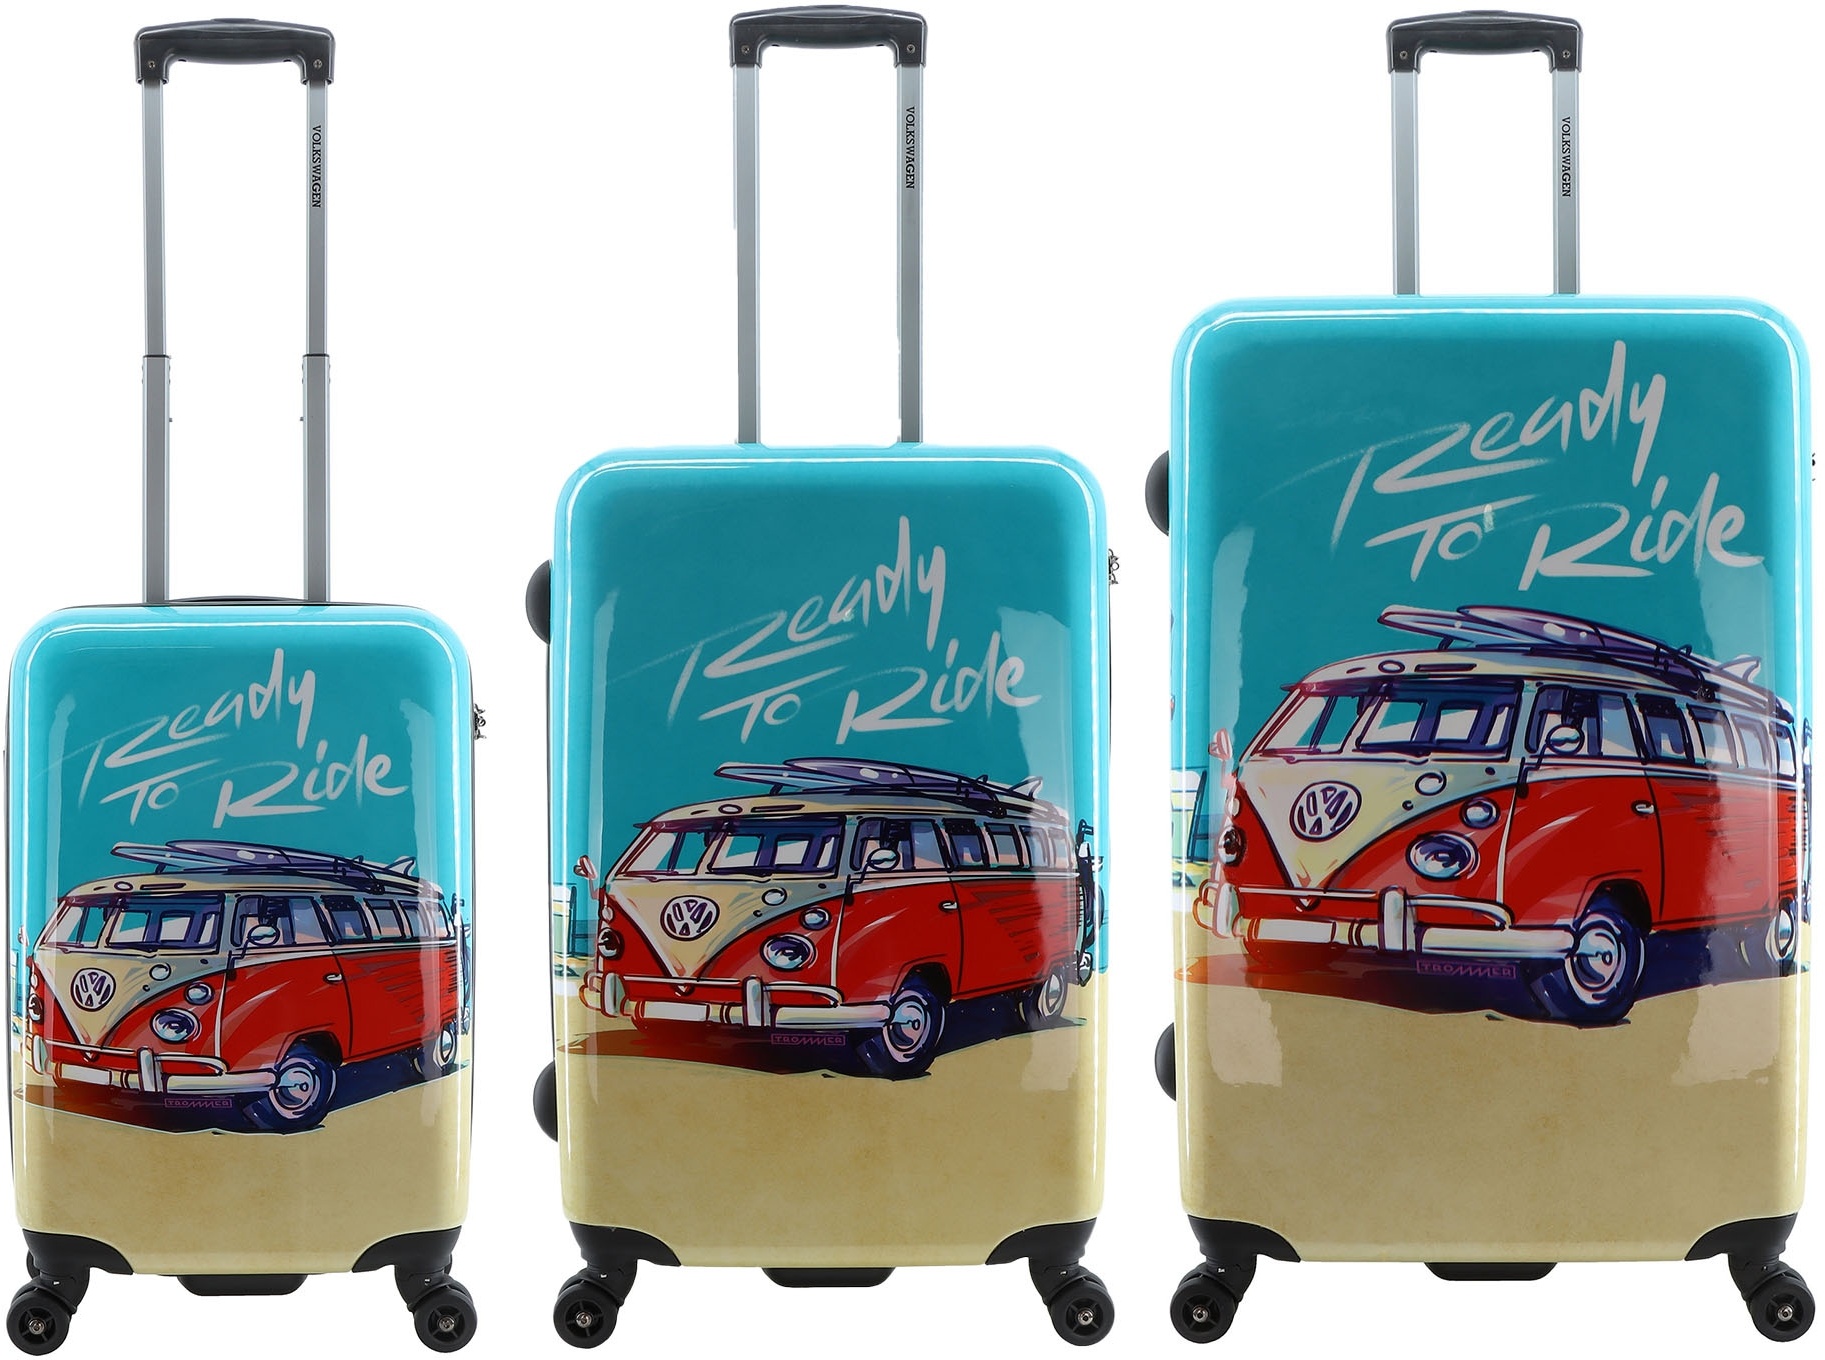 Koffer VOLKSWAGEN "Ready To Ride" Gr. B/H/T: 47 cm x 76 cm x 28 cm, bunt (mehrfarbig) Koffer Trolleys